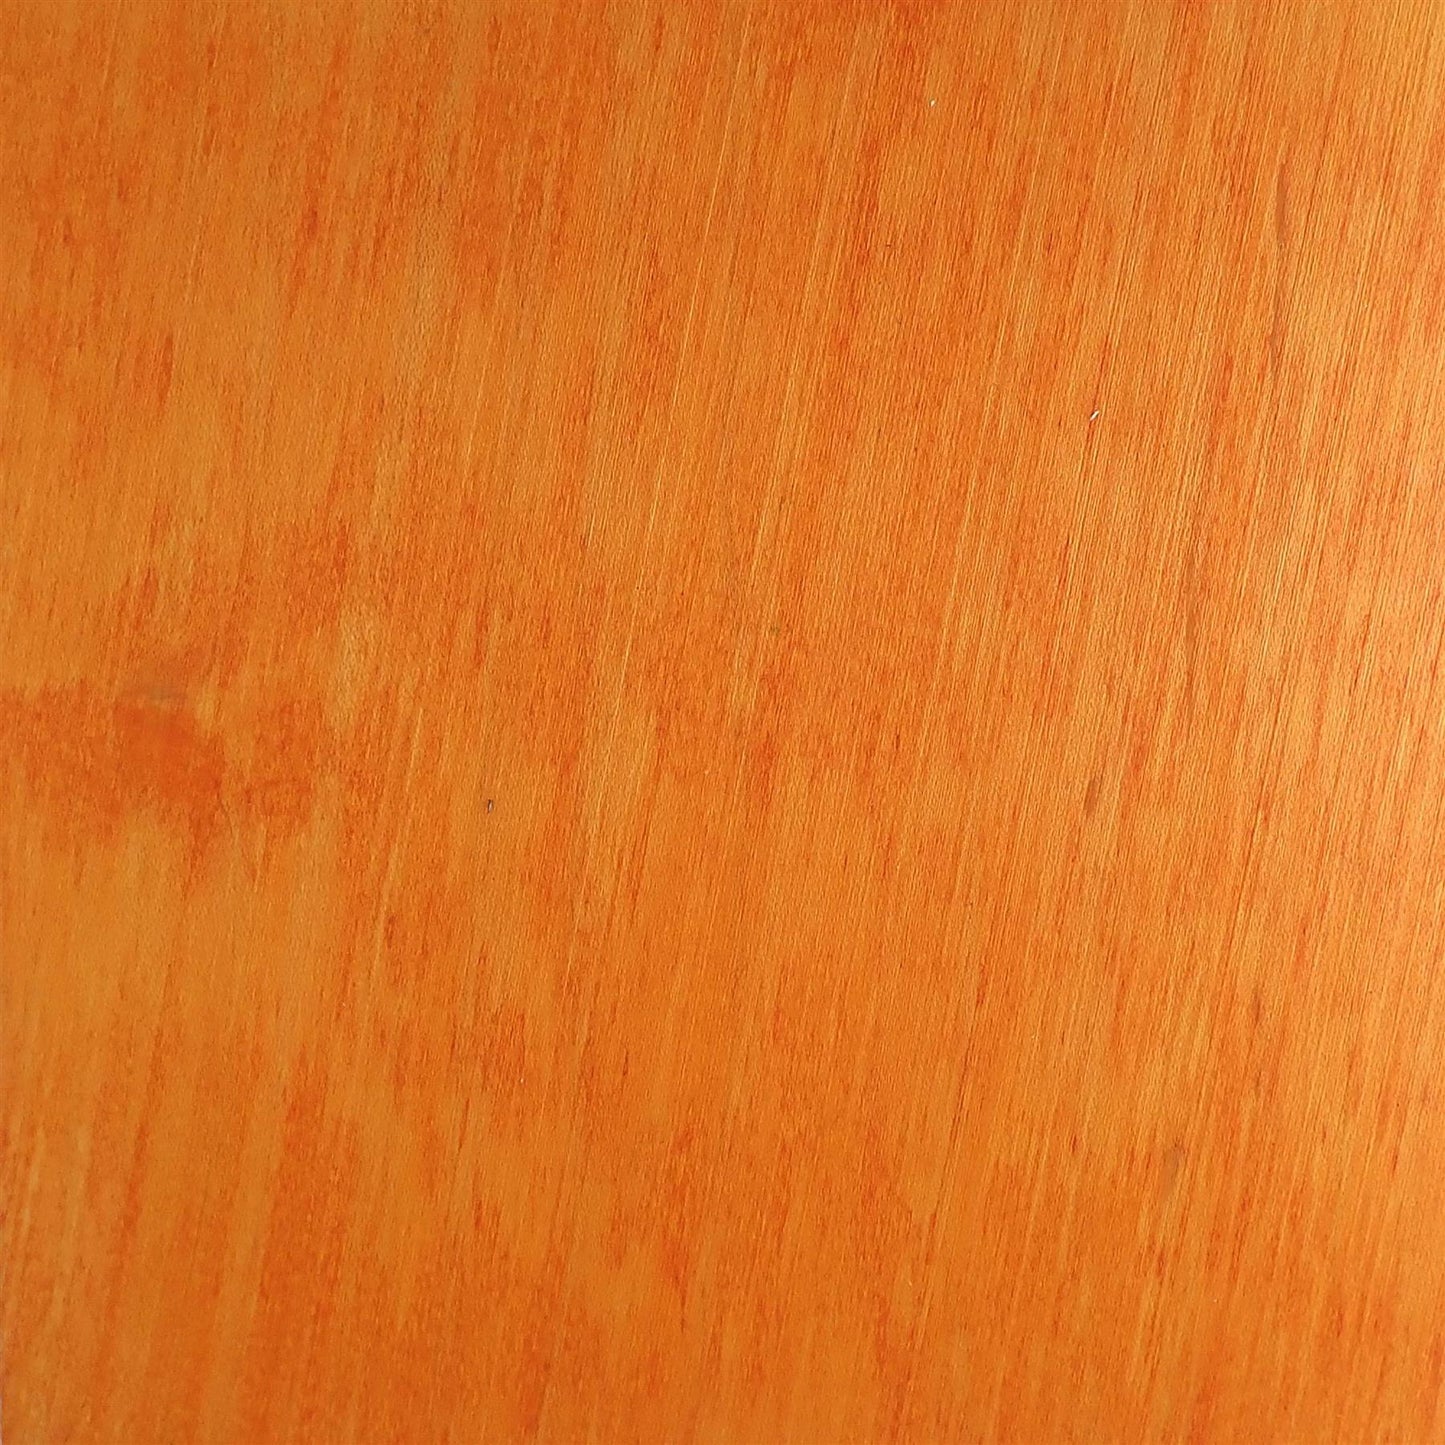 dartfords Orange Alcohol Soluble Aniline Wood Dye Powder - 28g 1Oz